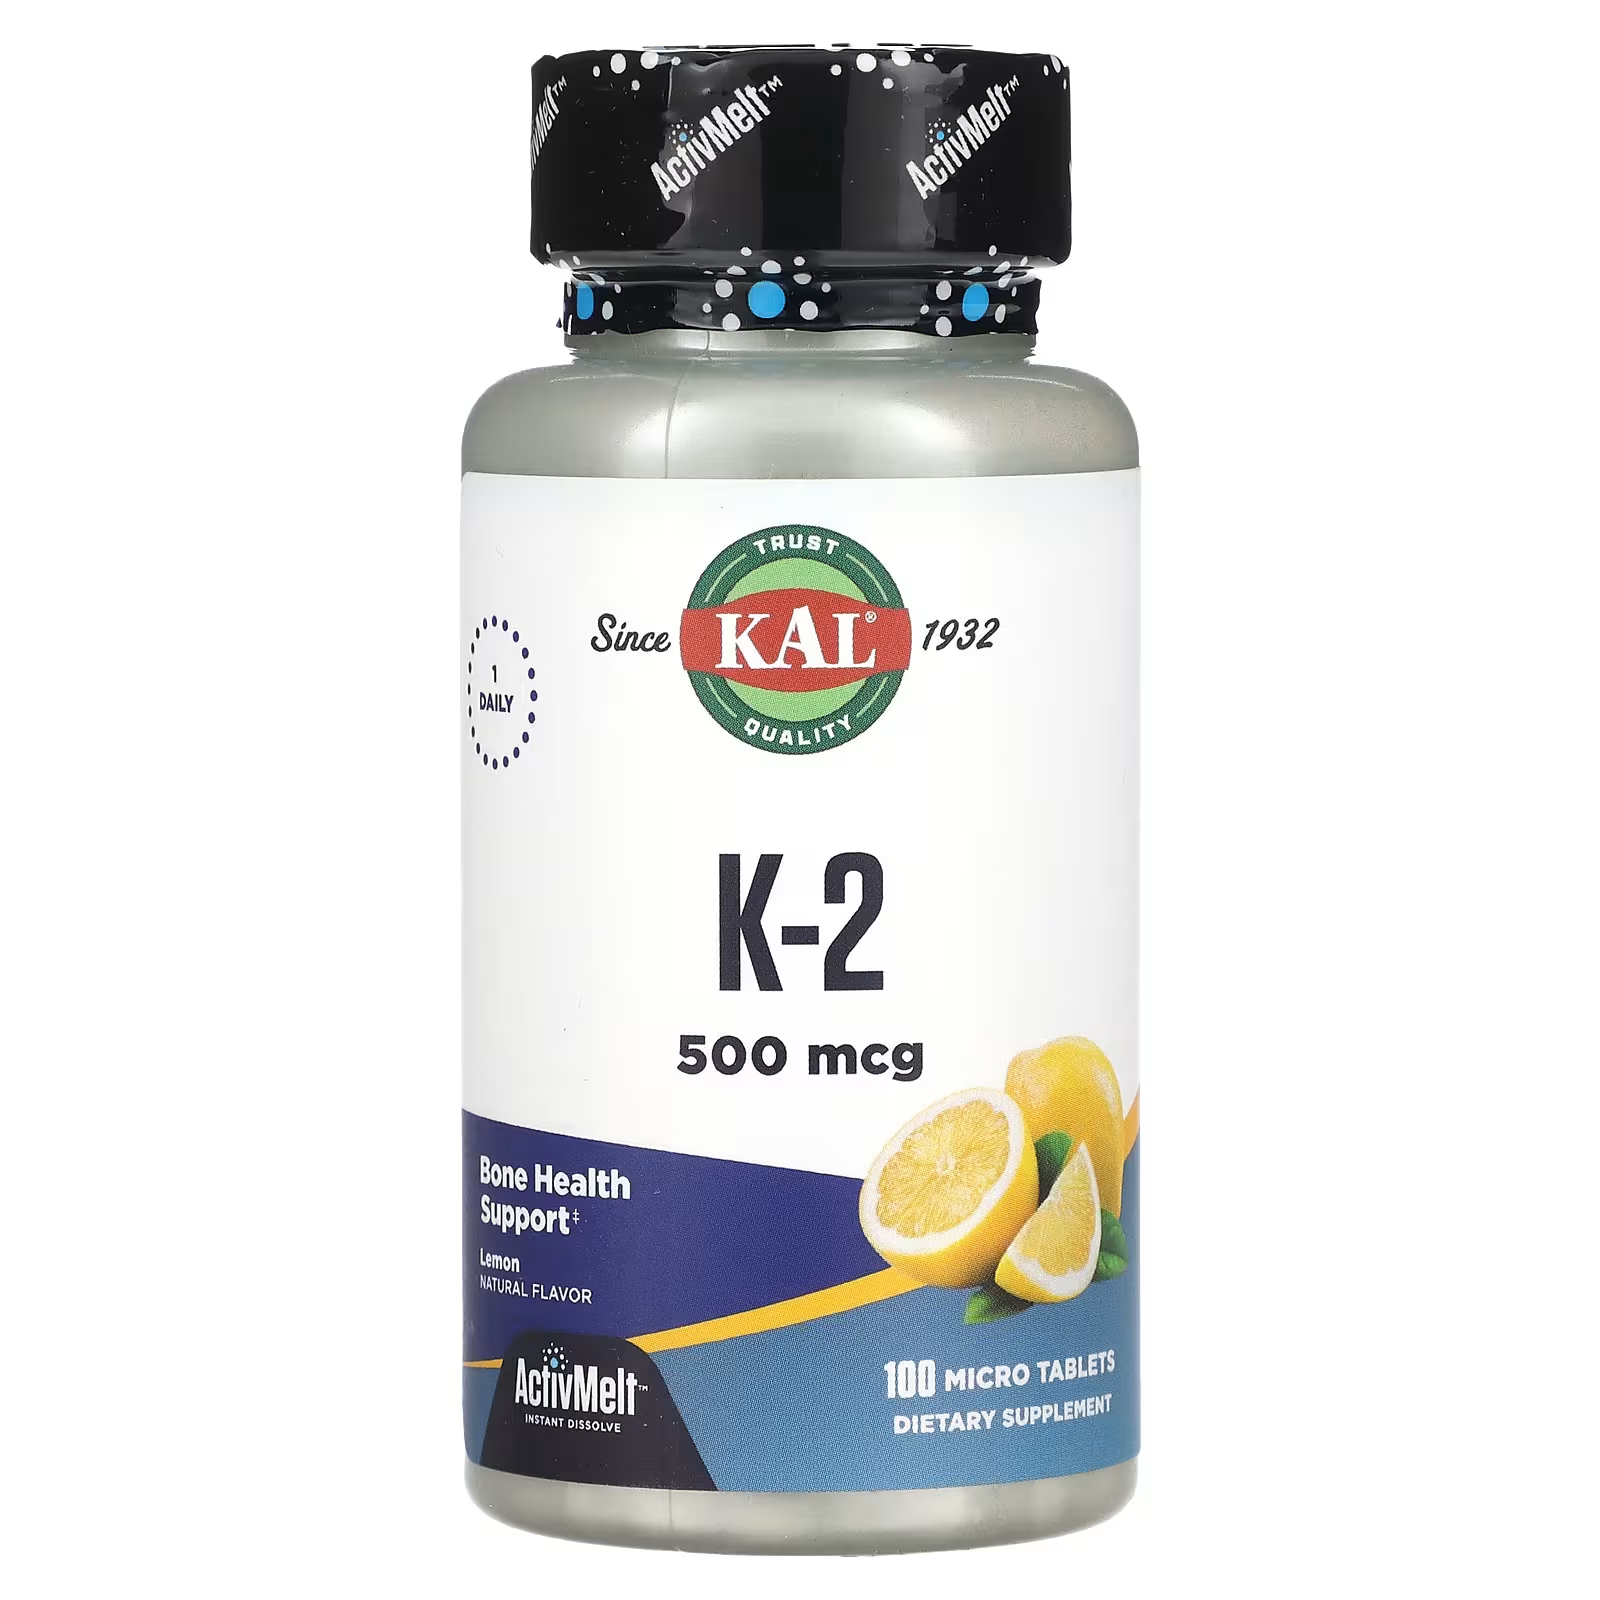 Пищевая добавка Kal K-2 лимон, 100 микротаблеток пищевая добавка kal d 3 лимонное безе 100 микротаблеток